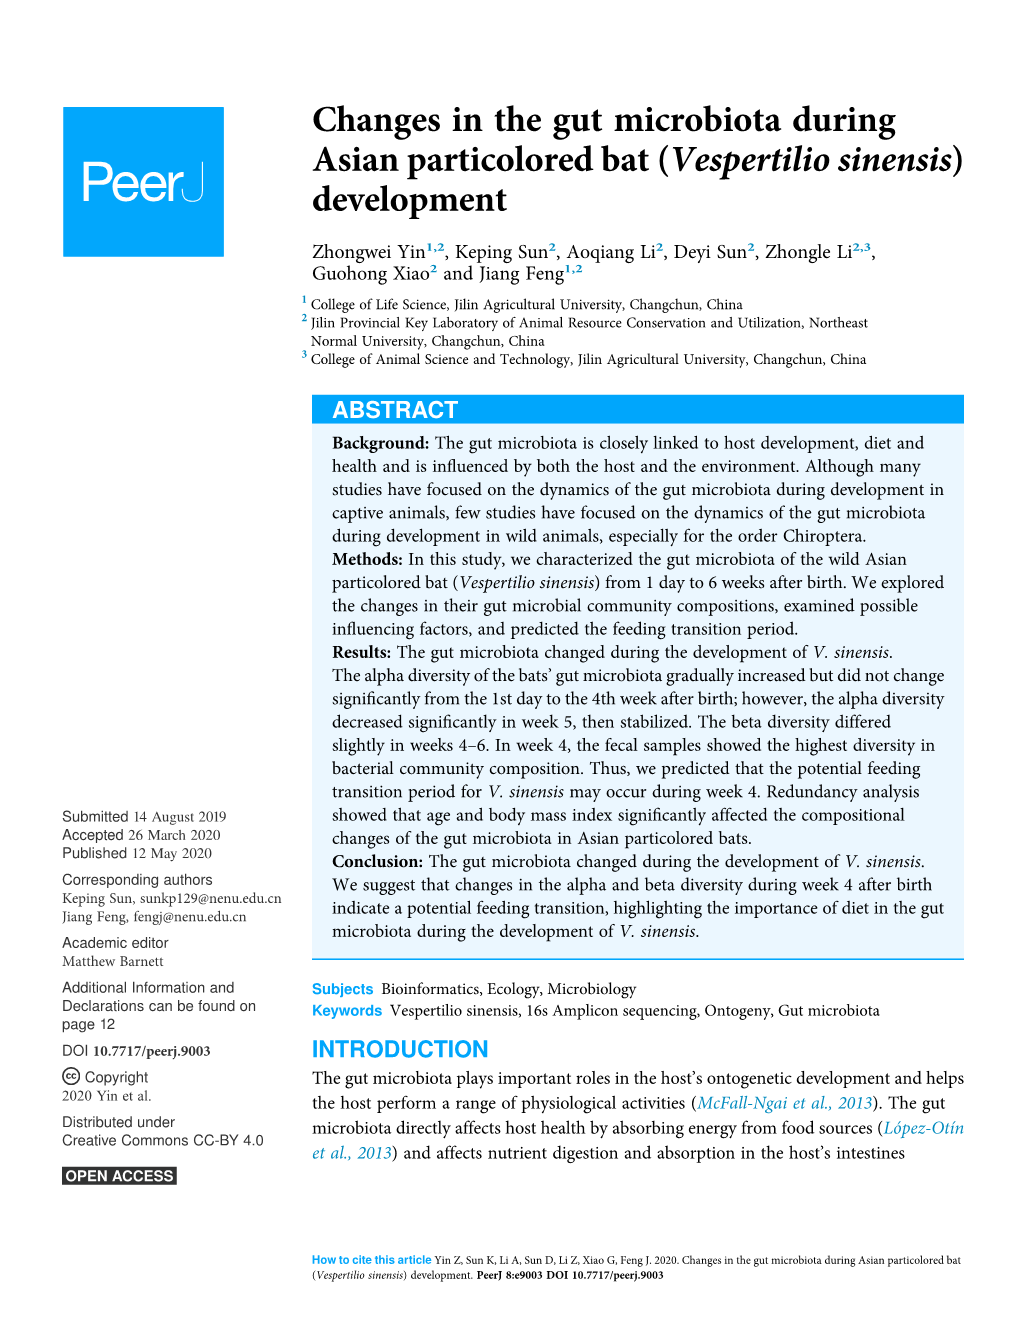 Changes in the Gut Microbiota During Asian Particolored Bat (Vespertilio Sinensis) Development